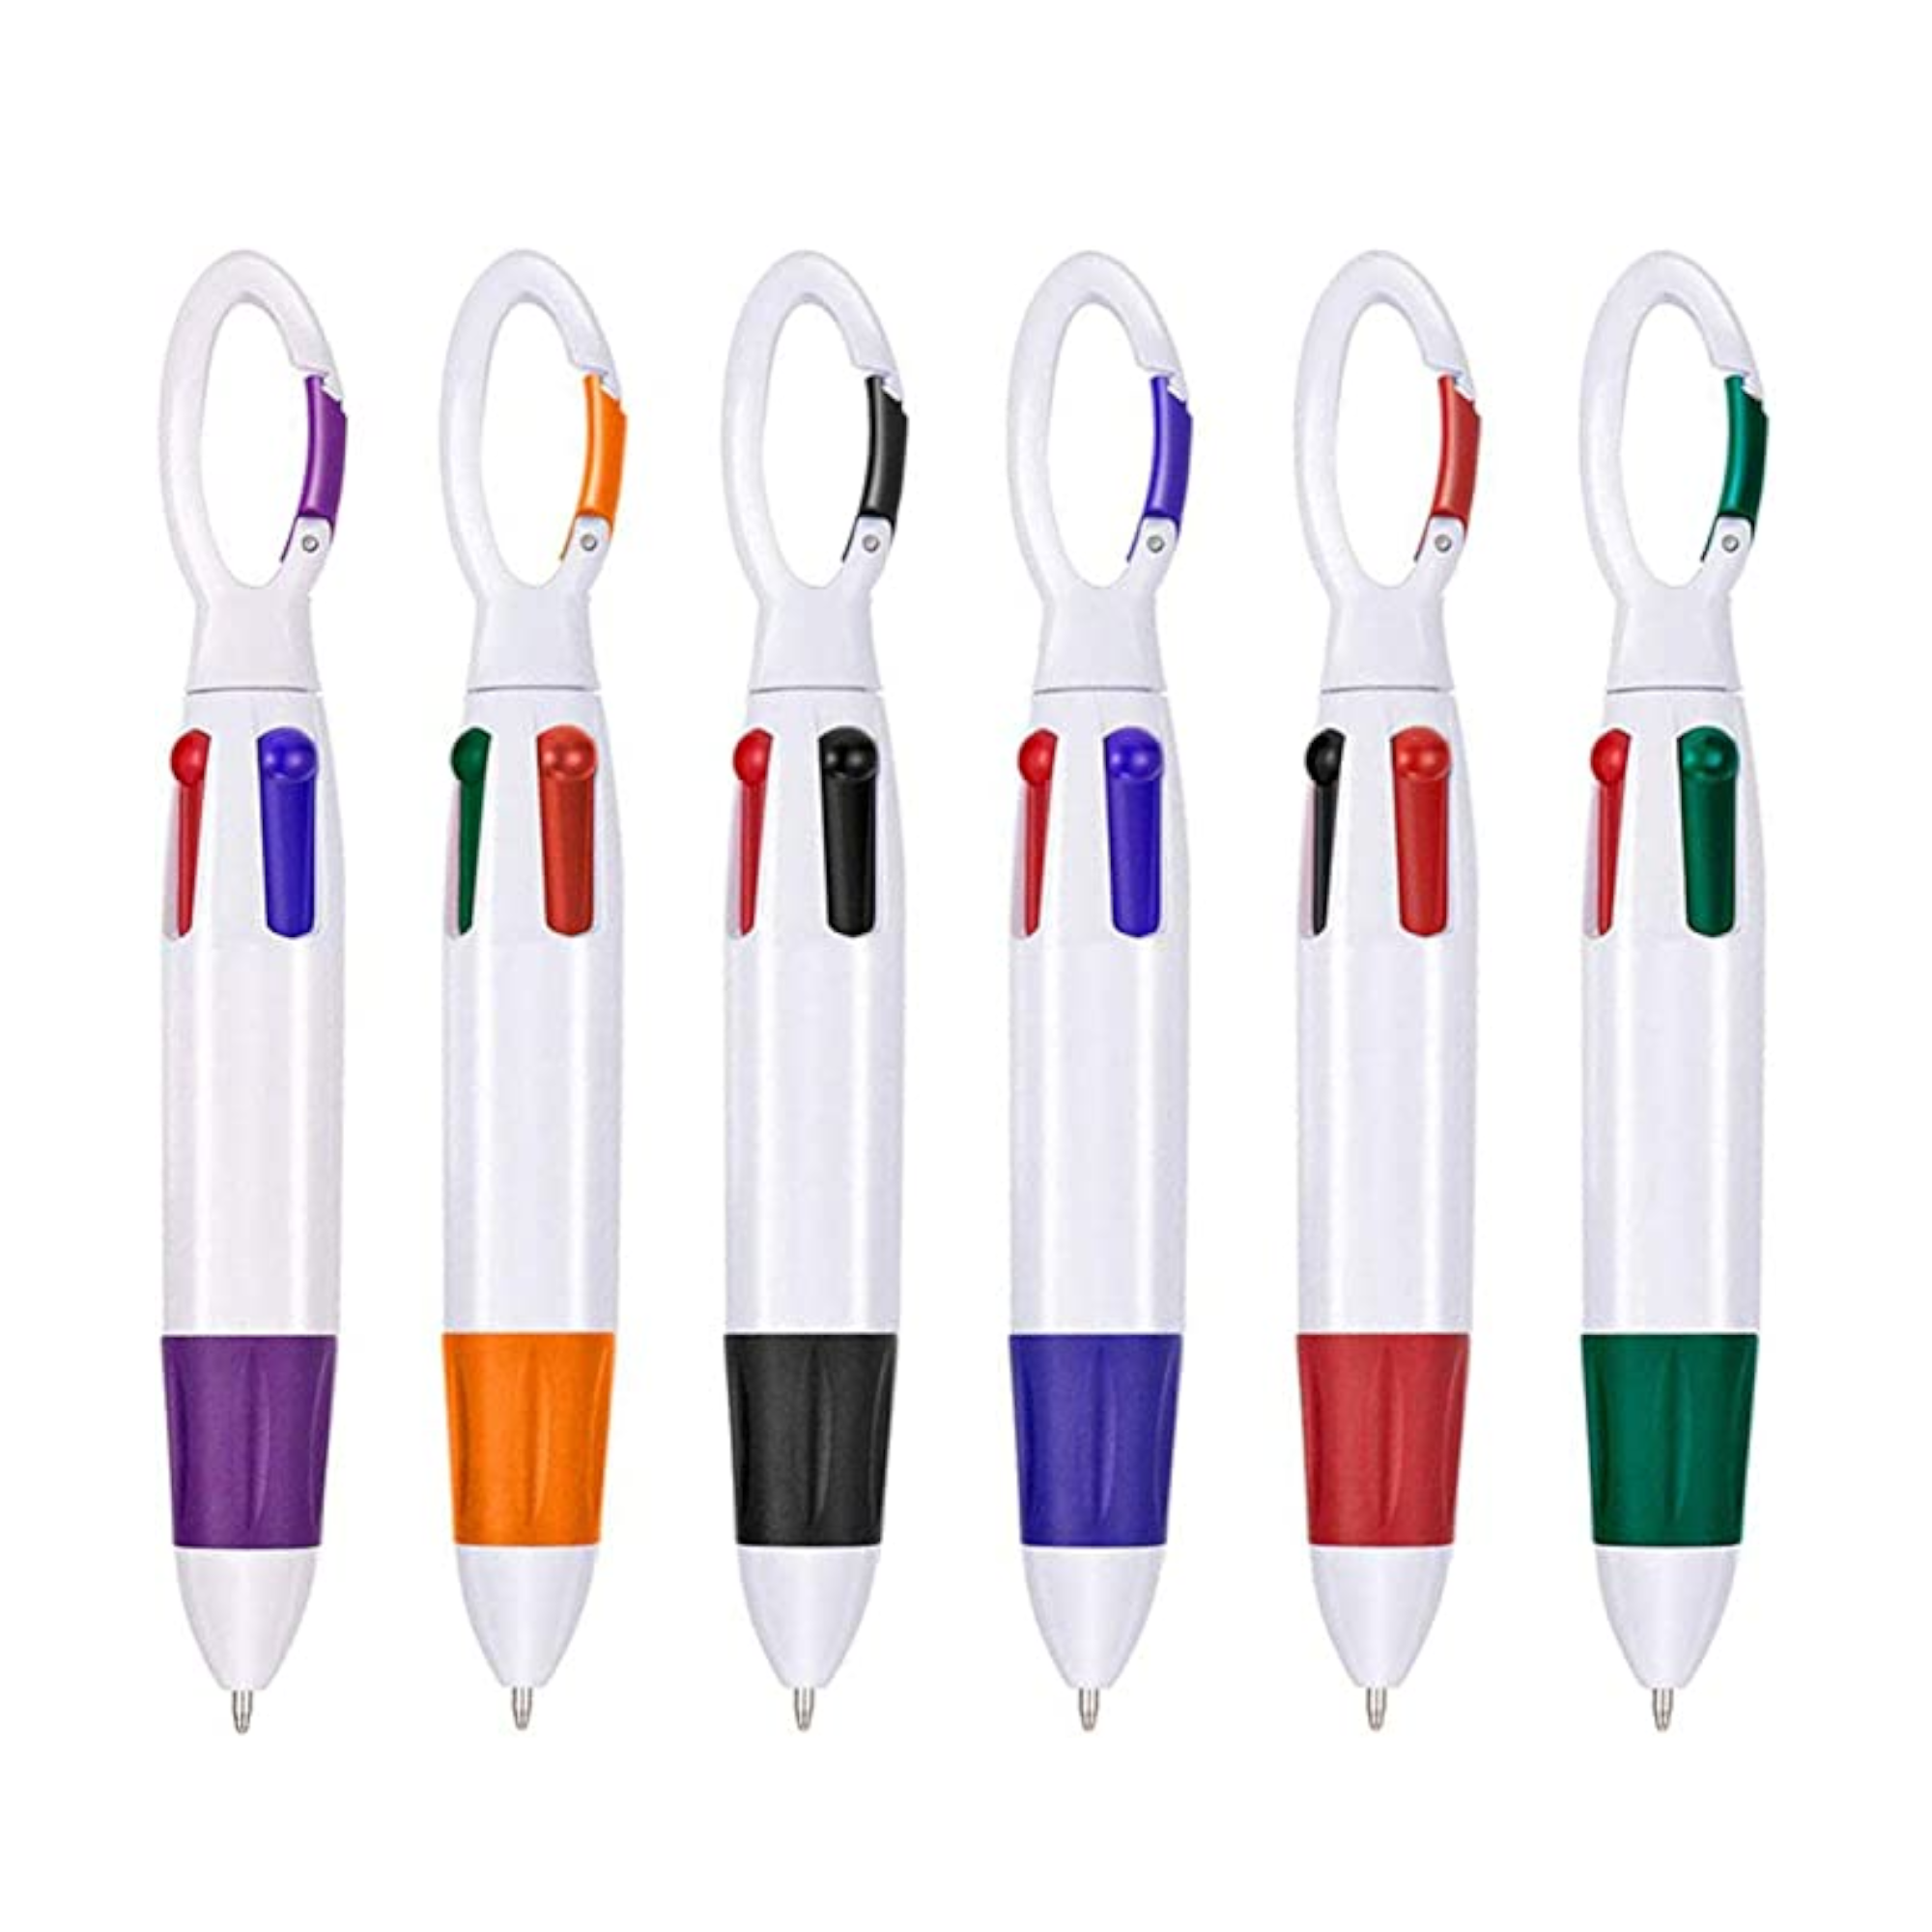 Great Chance Handy Retractable Badge Reel Ballpoint Pen Belt Clip Keychain  Carabiner 5 Pcs Assorted Colors